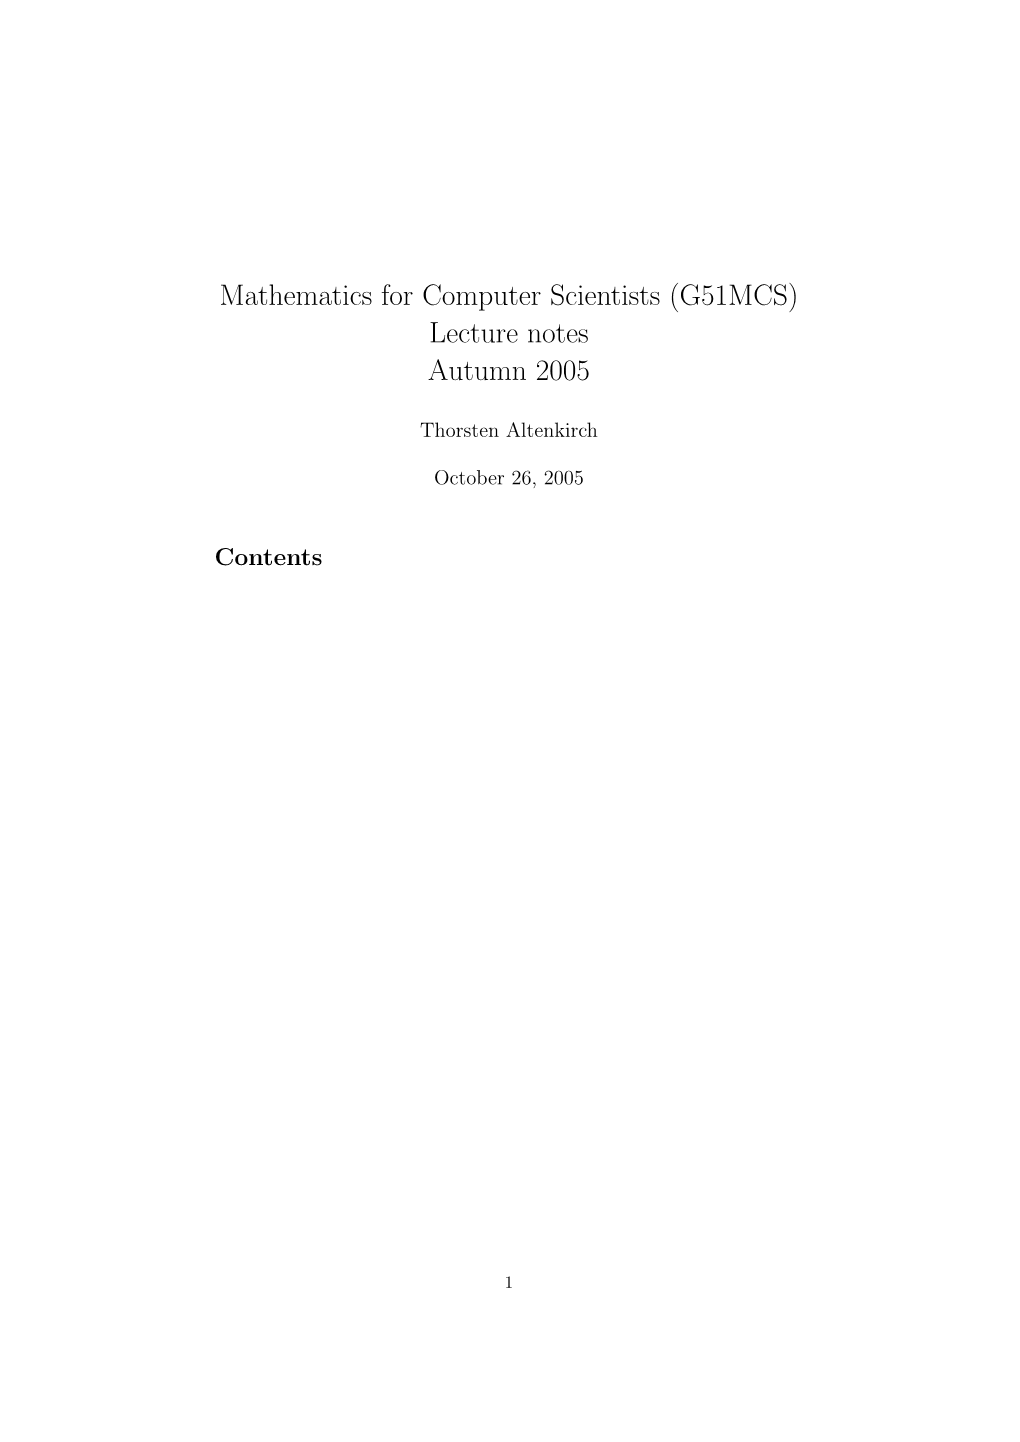 Mathematics for Computer Scientists (G51MCS) Lecture Notes Autumn 2005